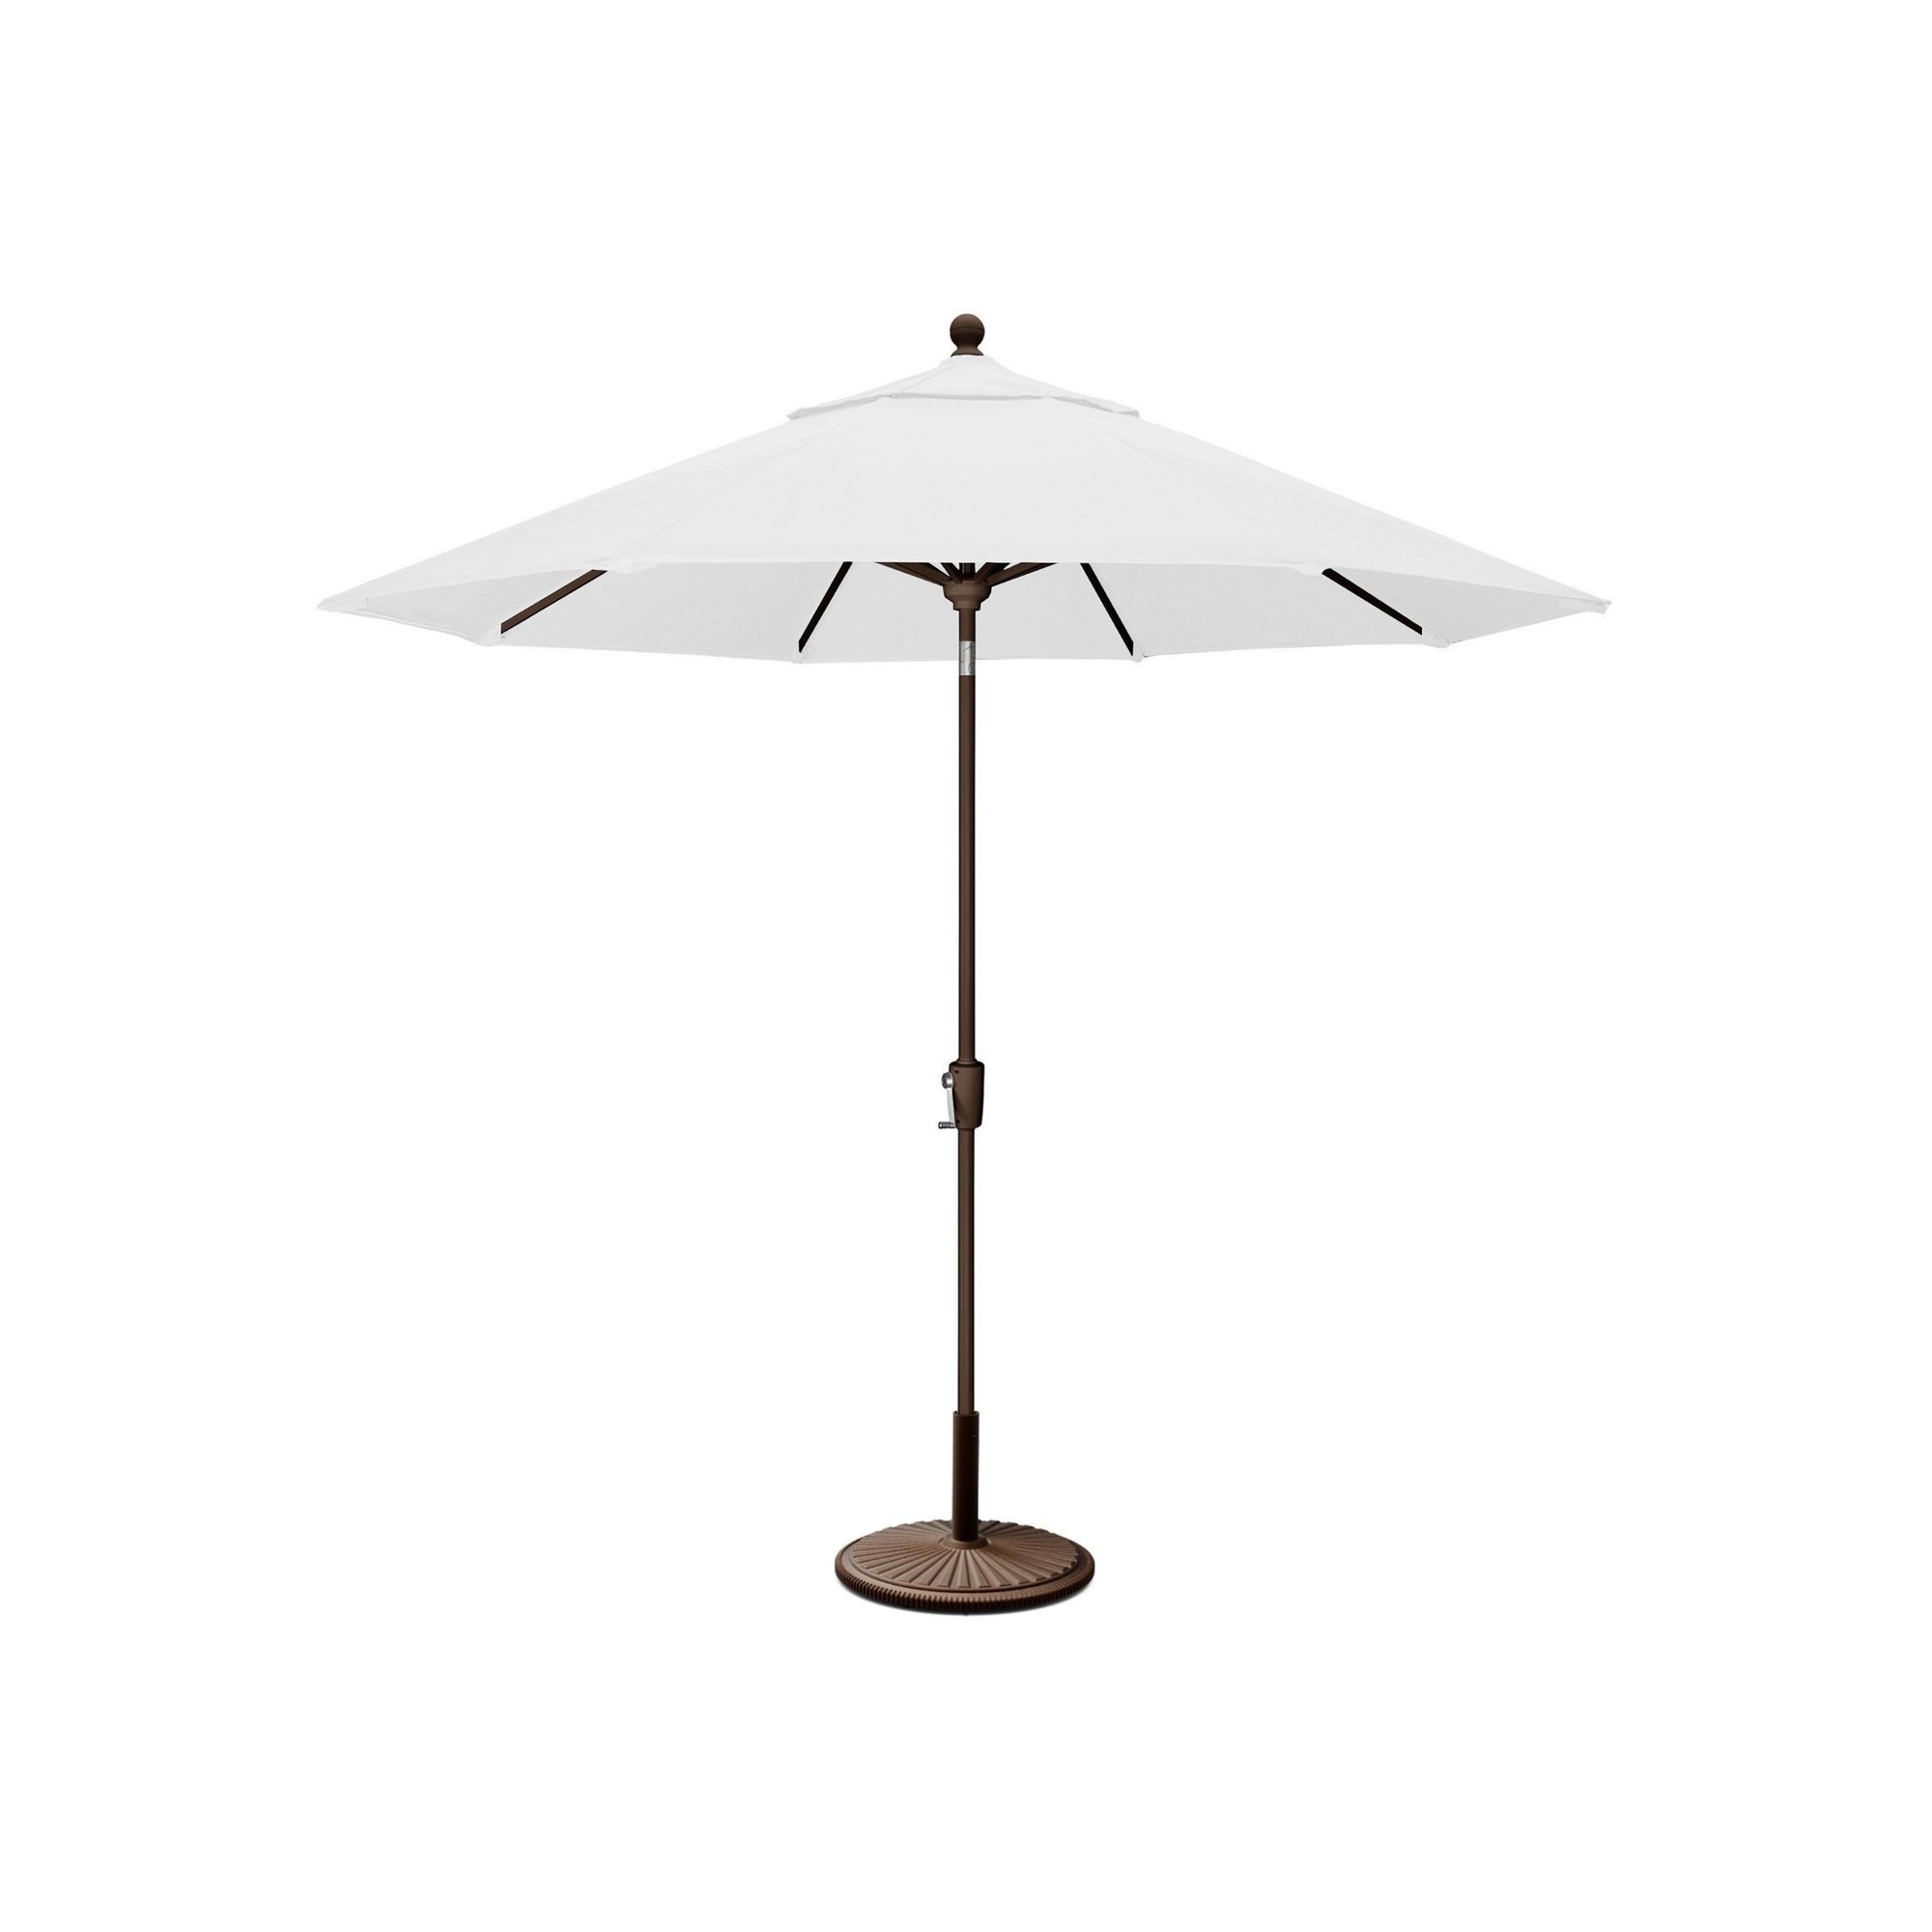 Black Canvas Outdoor Crank Umbrella, 10